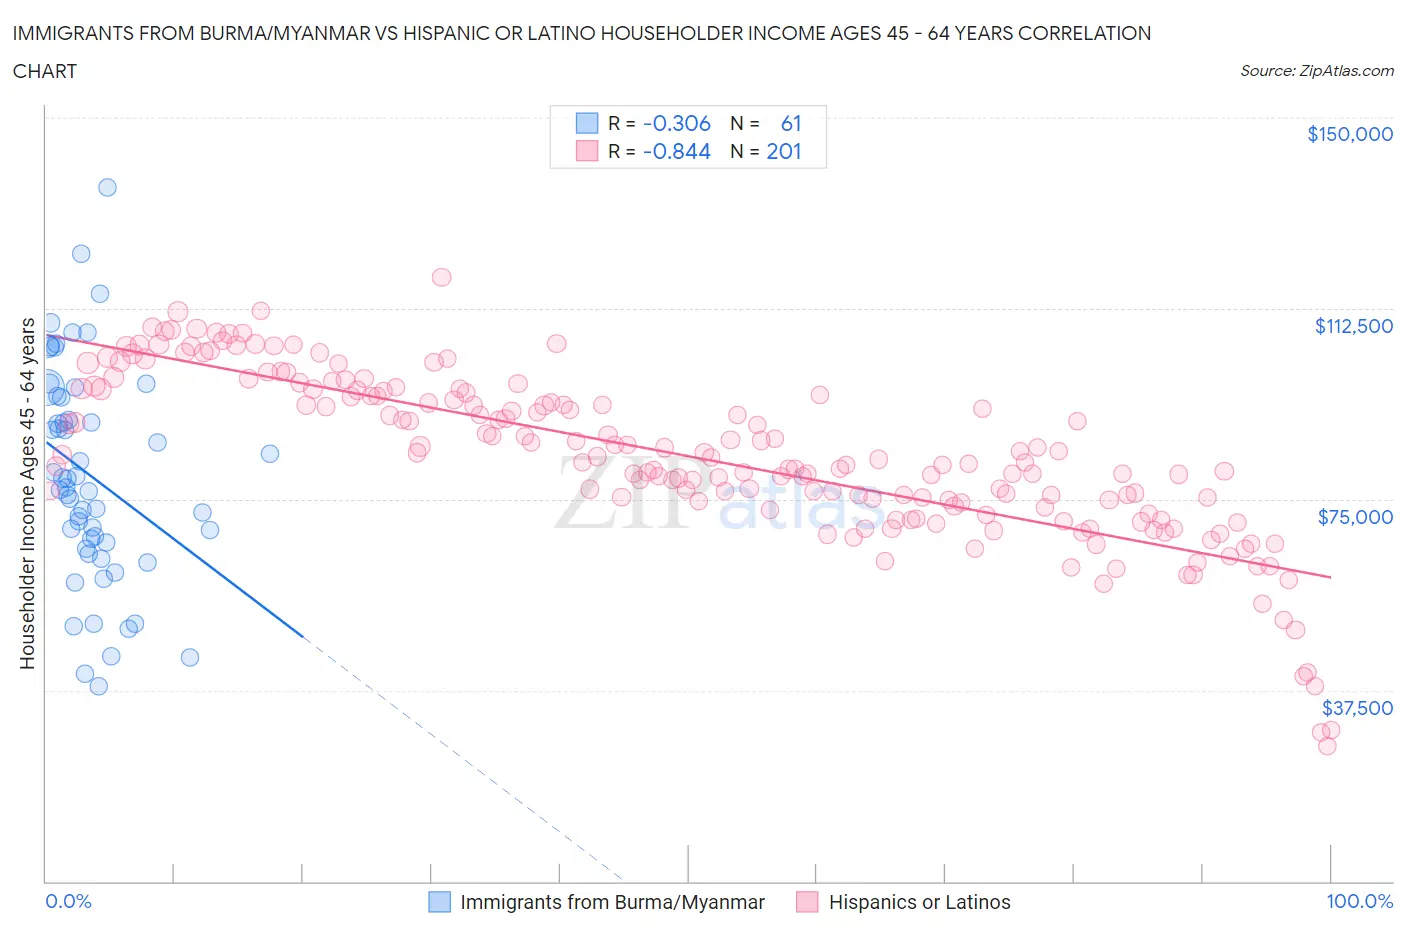 Immigrants from Burma/Myanmar vs Hispanic or Latino Householder Income Ages 45 - 64 years